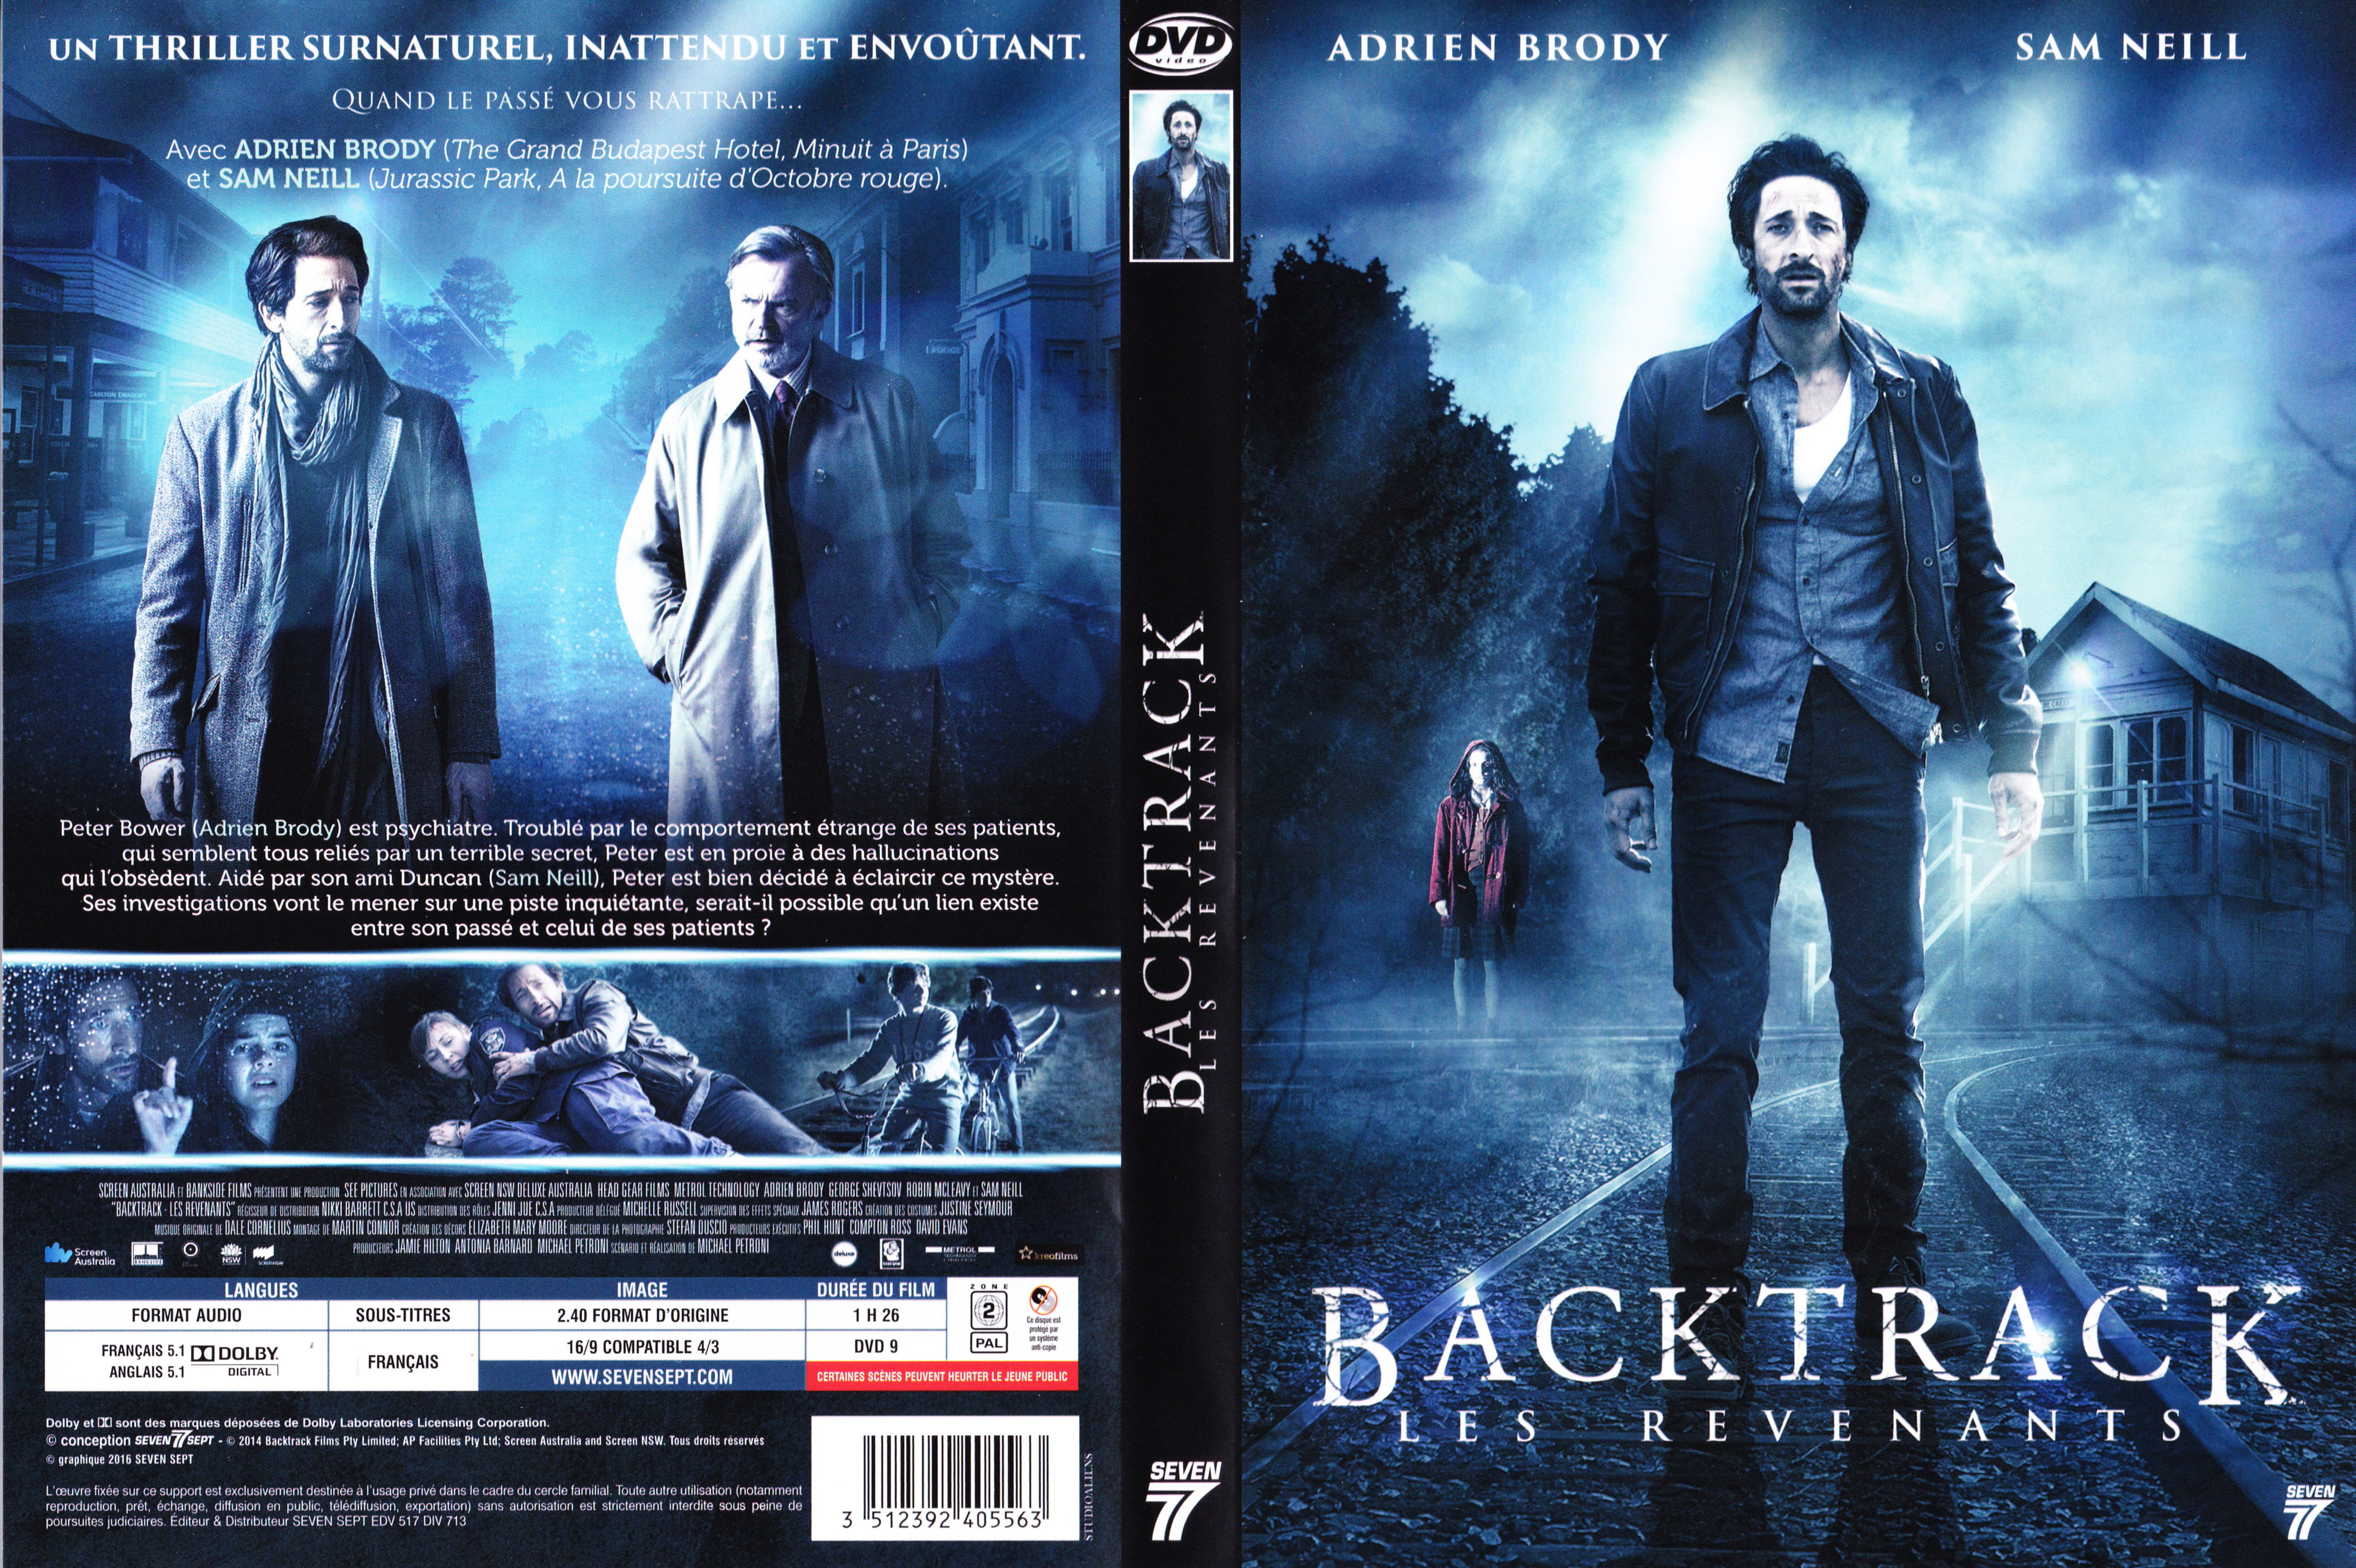 Jaquette DVD Backtrack - Les revenants